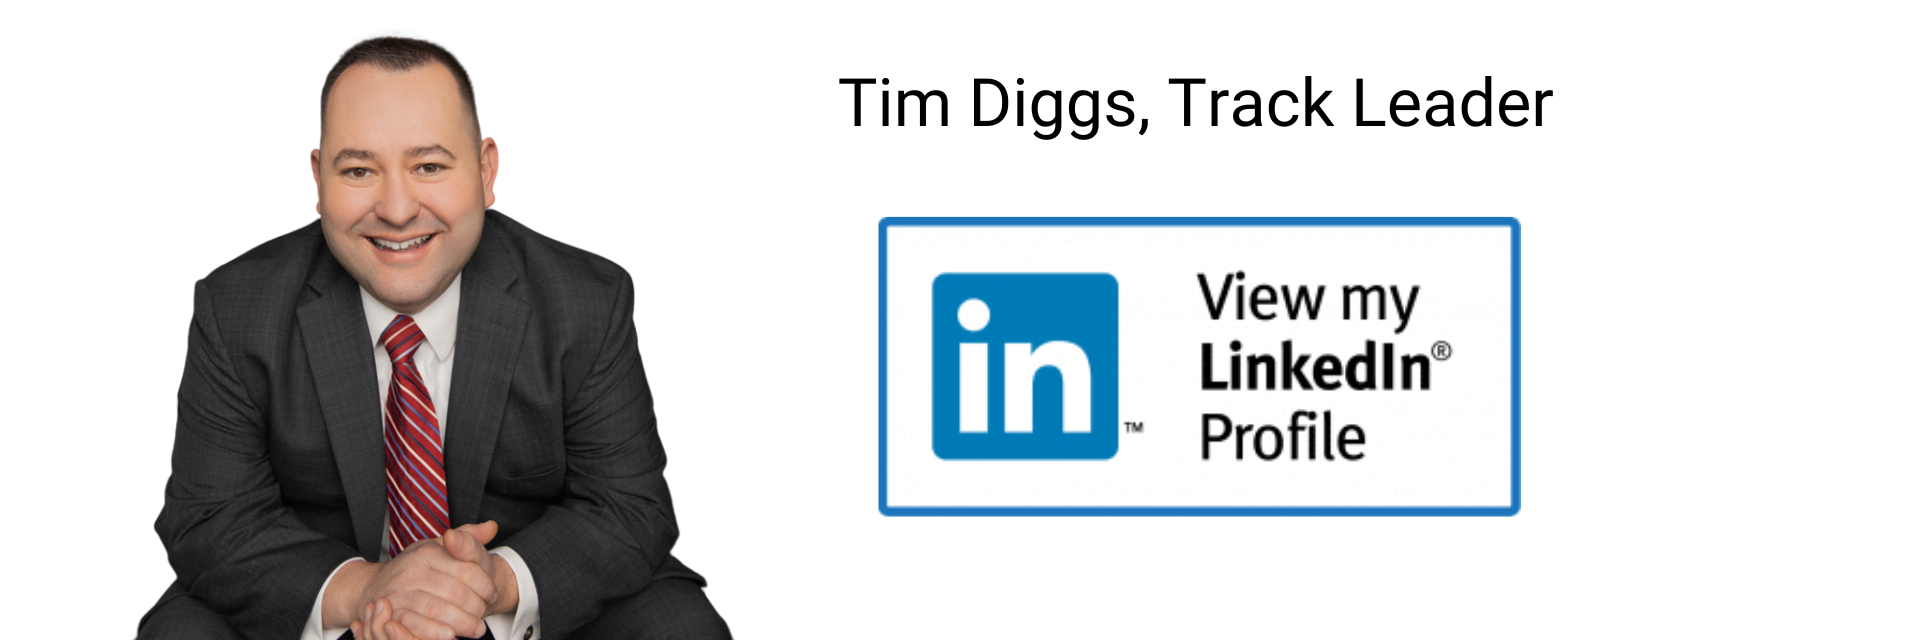 Track Leader Tim Diggs